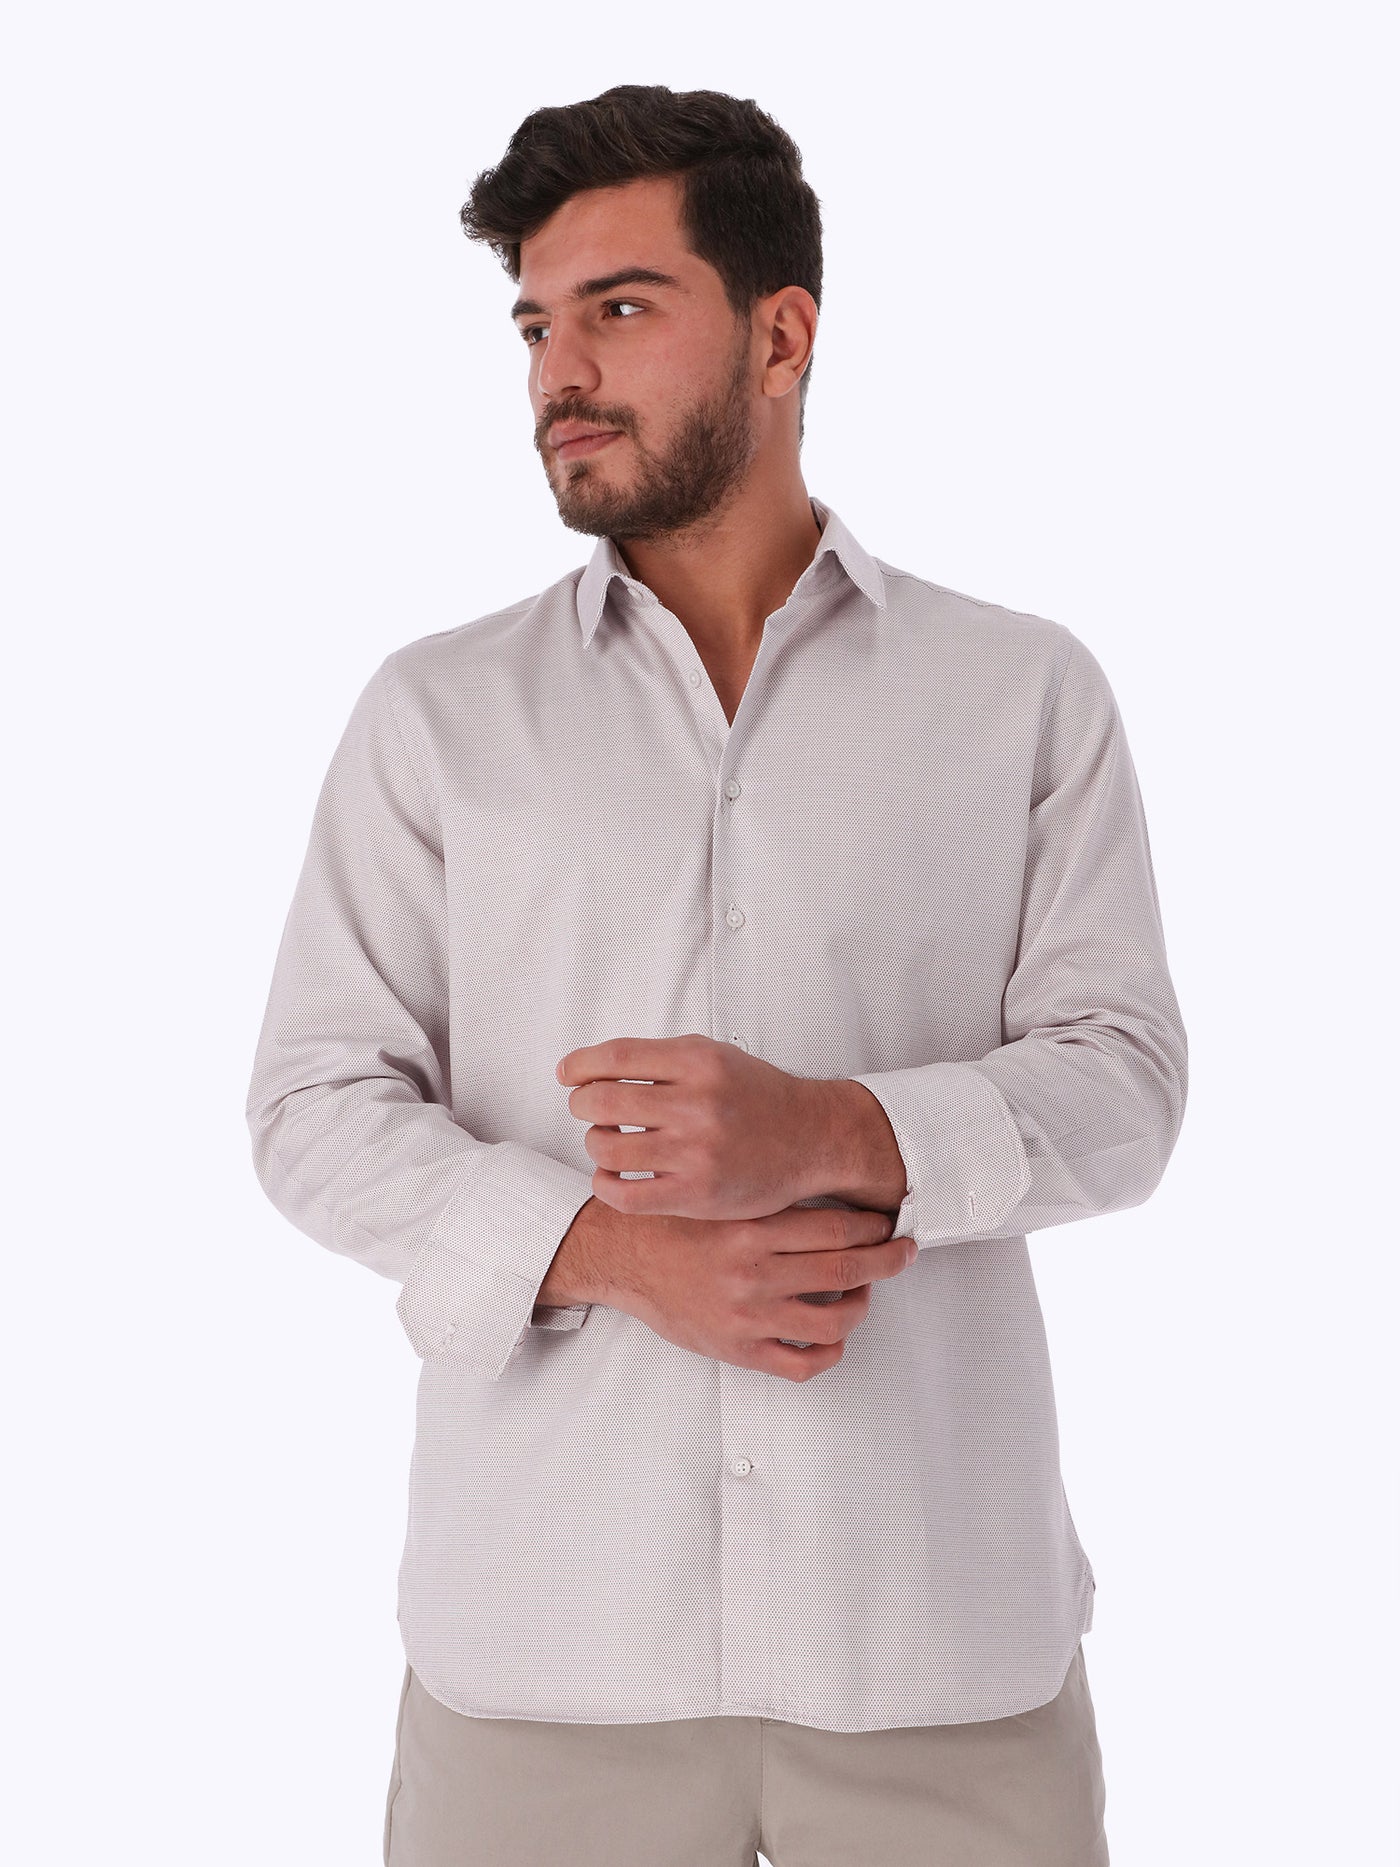 Shirt - Long Sleeves - Jacquard